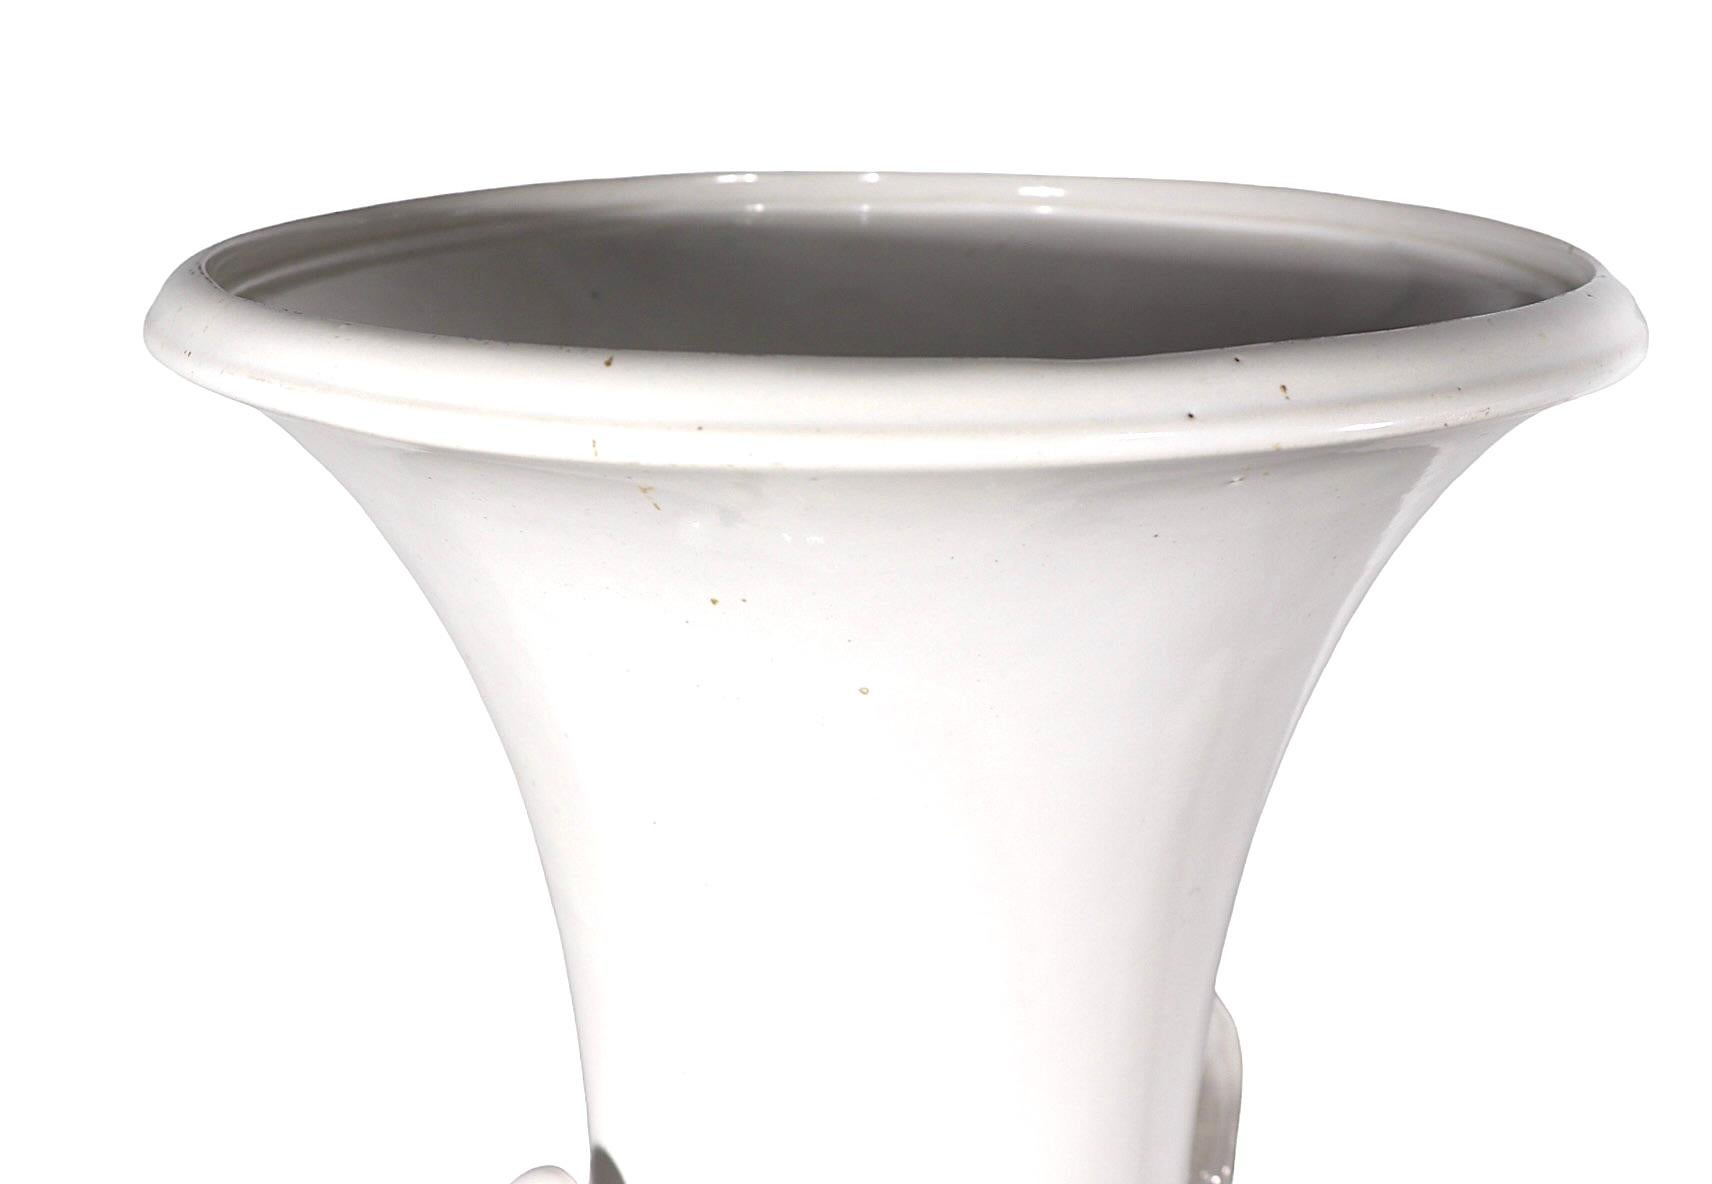 Neoclassical Revival Pr. White on White Ceramic Urn Campagna  Form Vases   For Sale